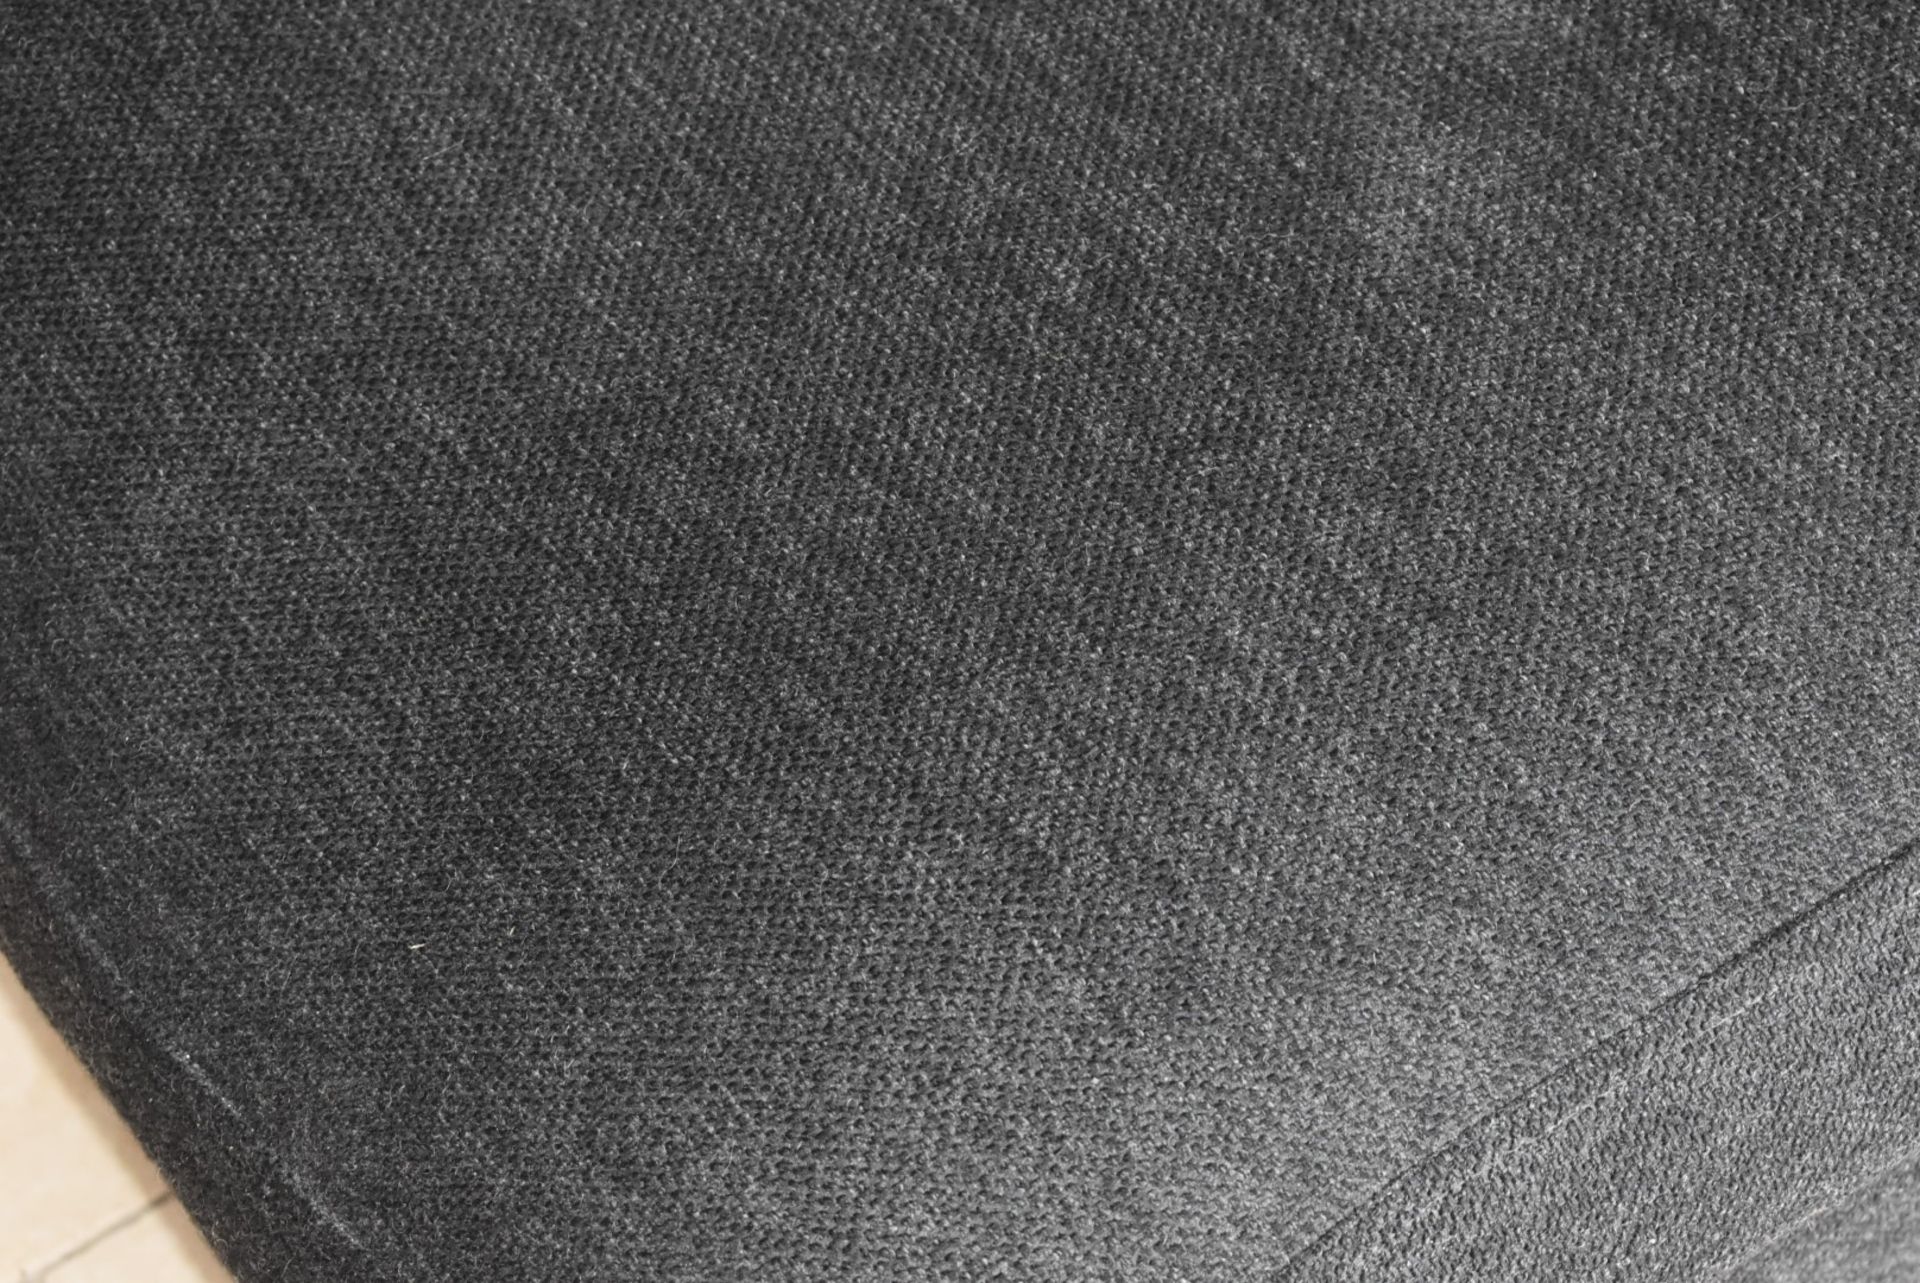 1 x Large Corner Sofa Upholstered in Dark Grey Grey Fabric - Inc Footstool - NO VAT ON THE HAMMER! - Image 8 of 15